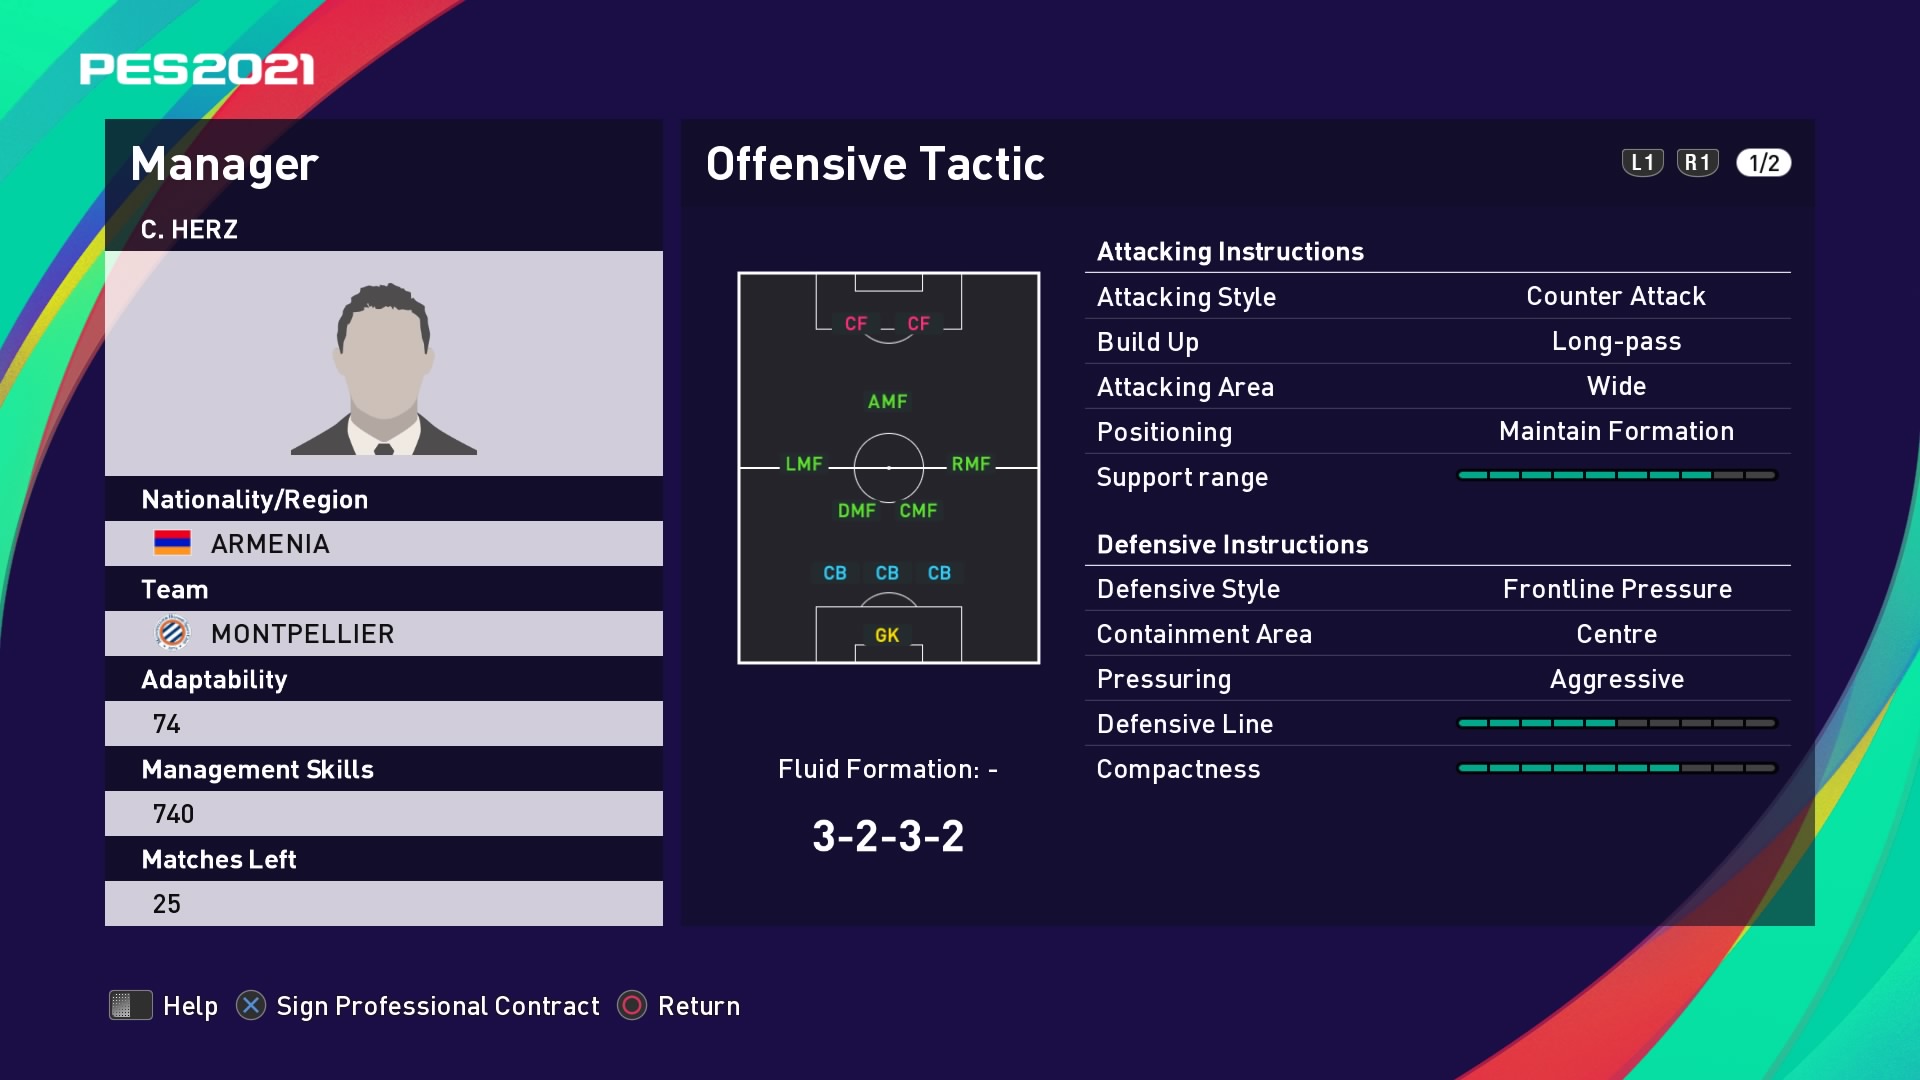 C. Herz (Michel Der Zakarian) Offensive Tactic in PES 2021 myClub